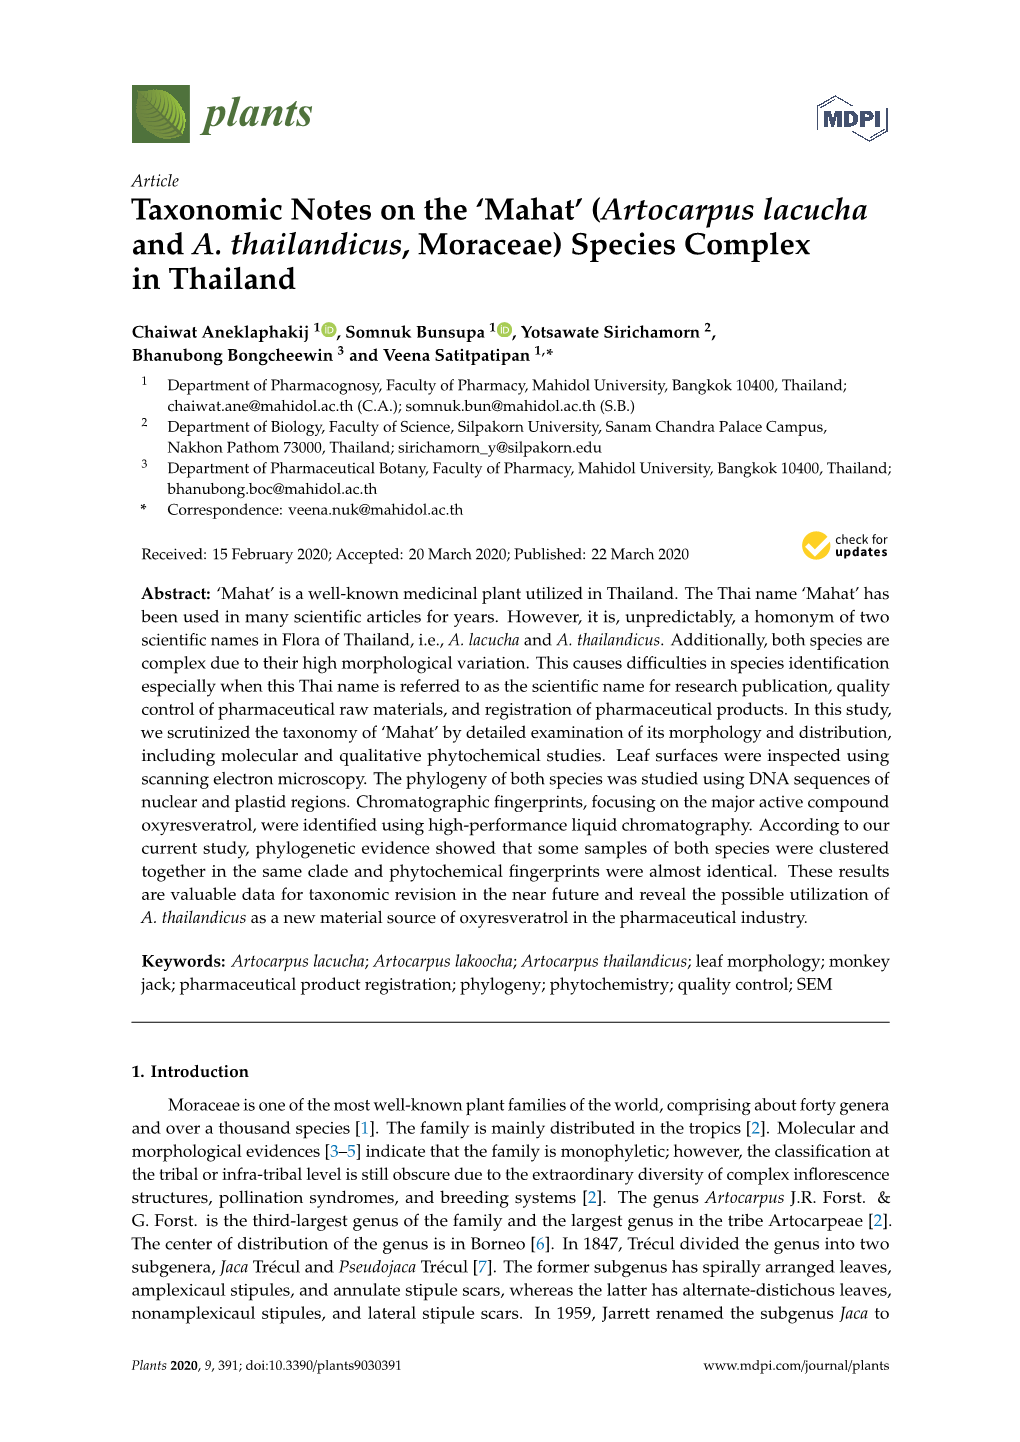 Taxonomic Notes on the 'Mahat'(Artocarpus Lacucha and A